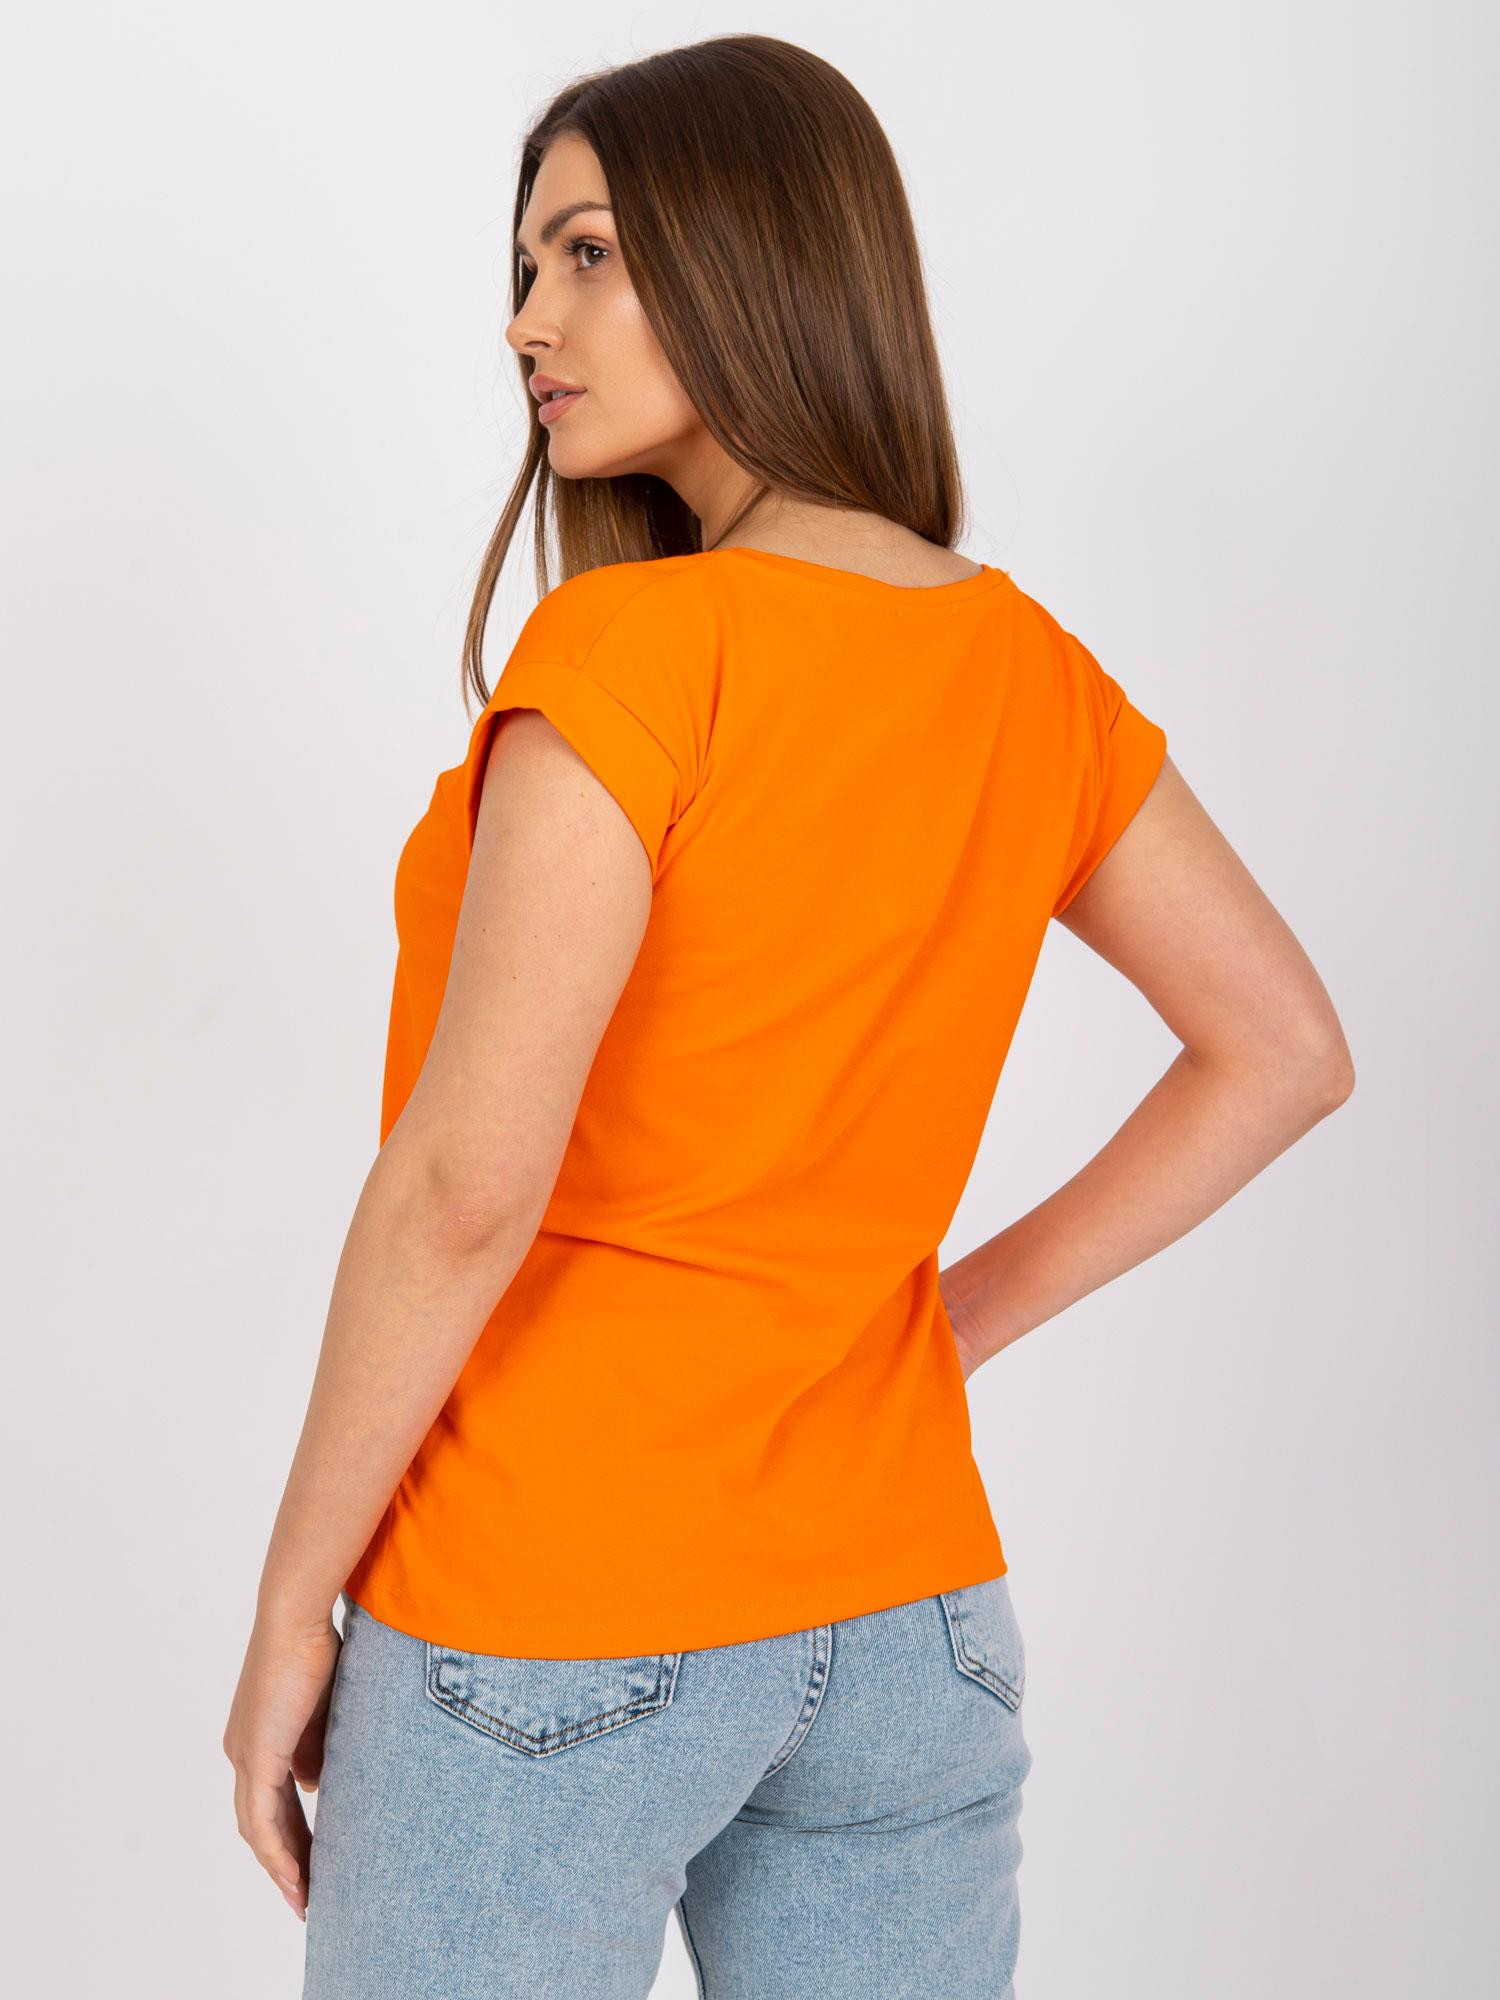 Tričko RV TS 7543.12x oranžová XL